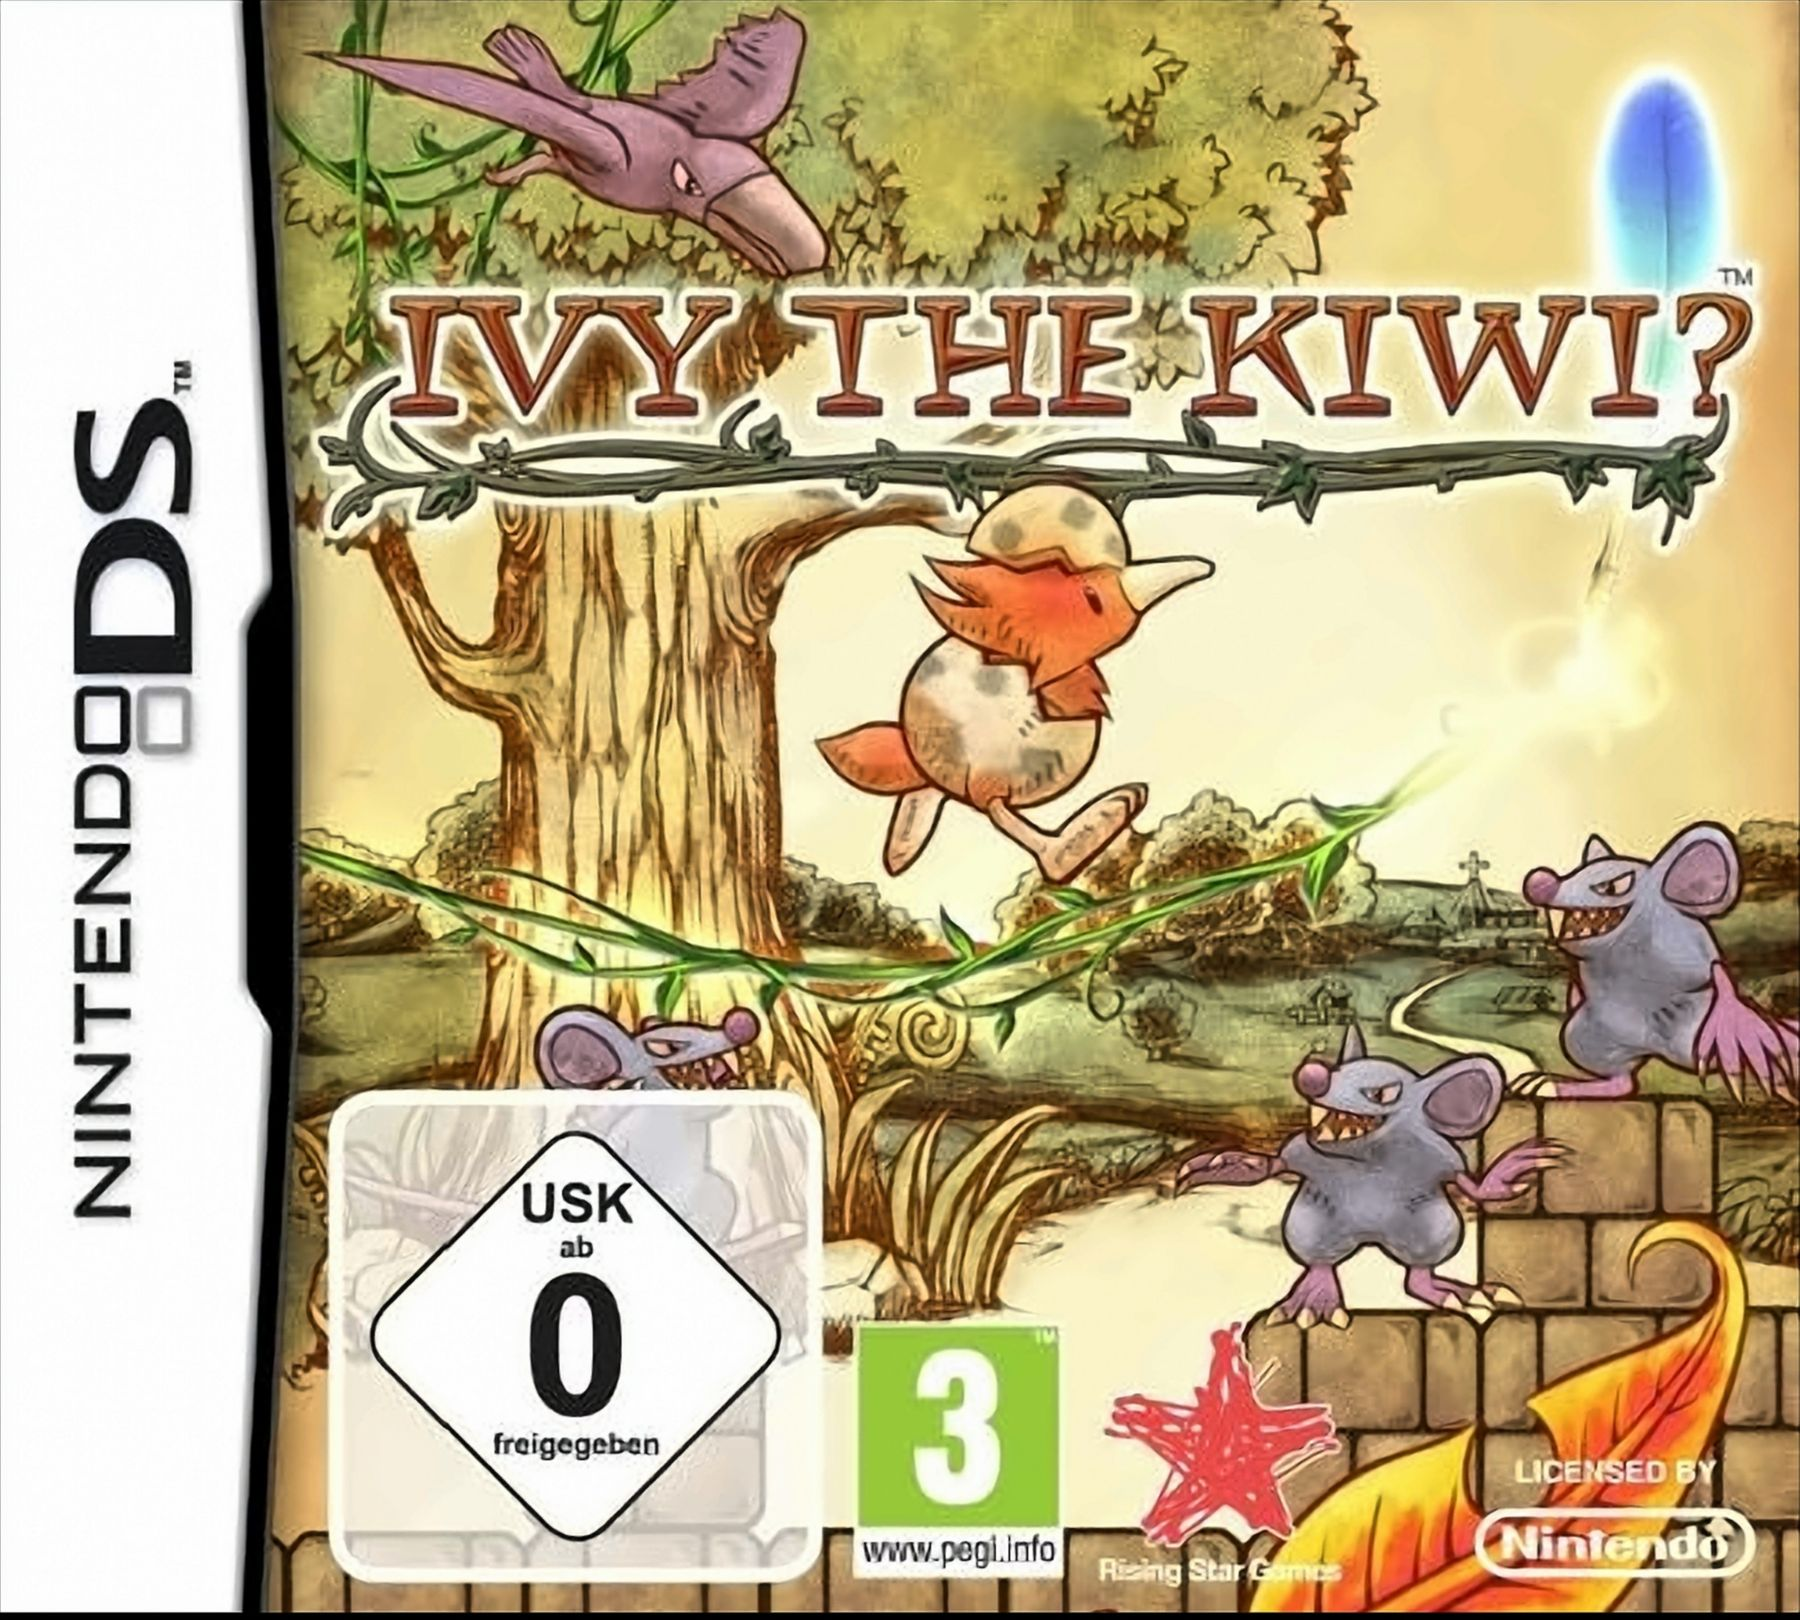 DS] [Nintendo Kiwi Ivy The -